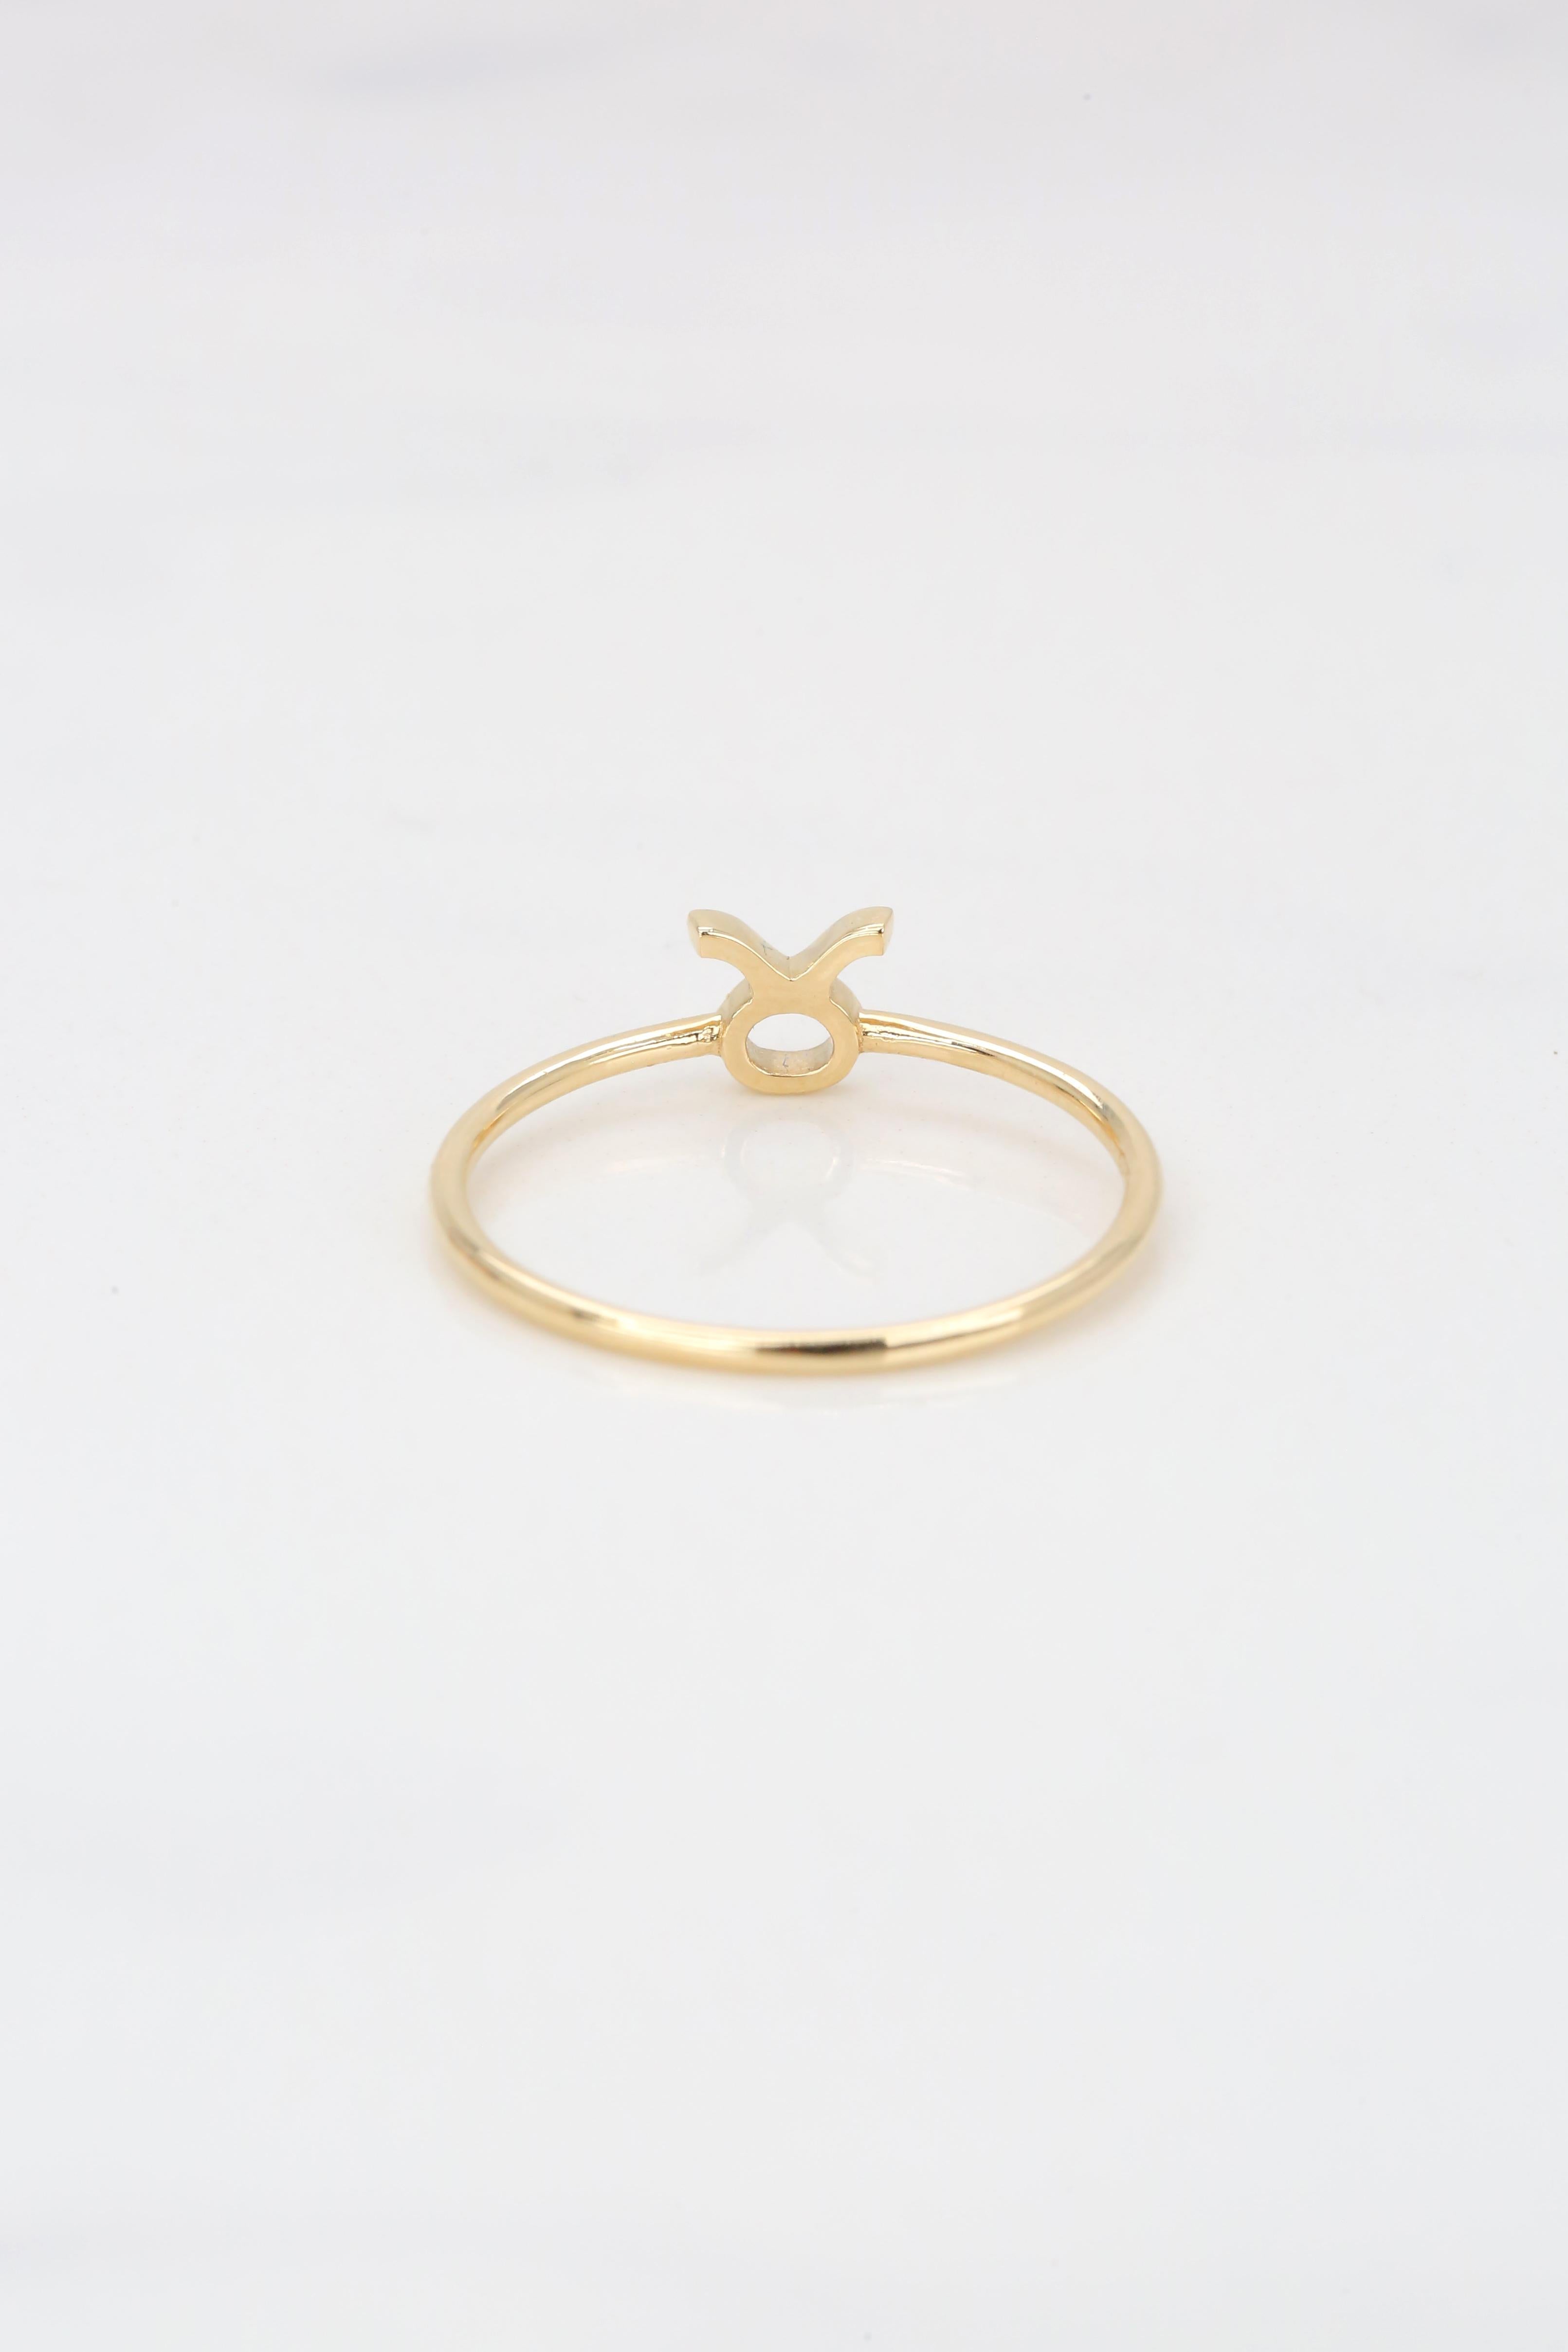 For Sale:  14K Gold Taurus Zodiac Ring, Taurus Sign Zodiac Ring 5